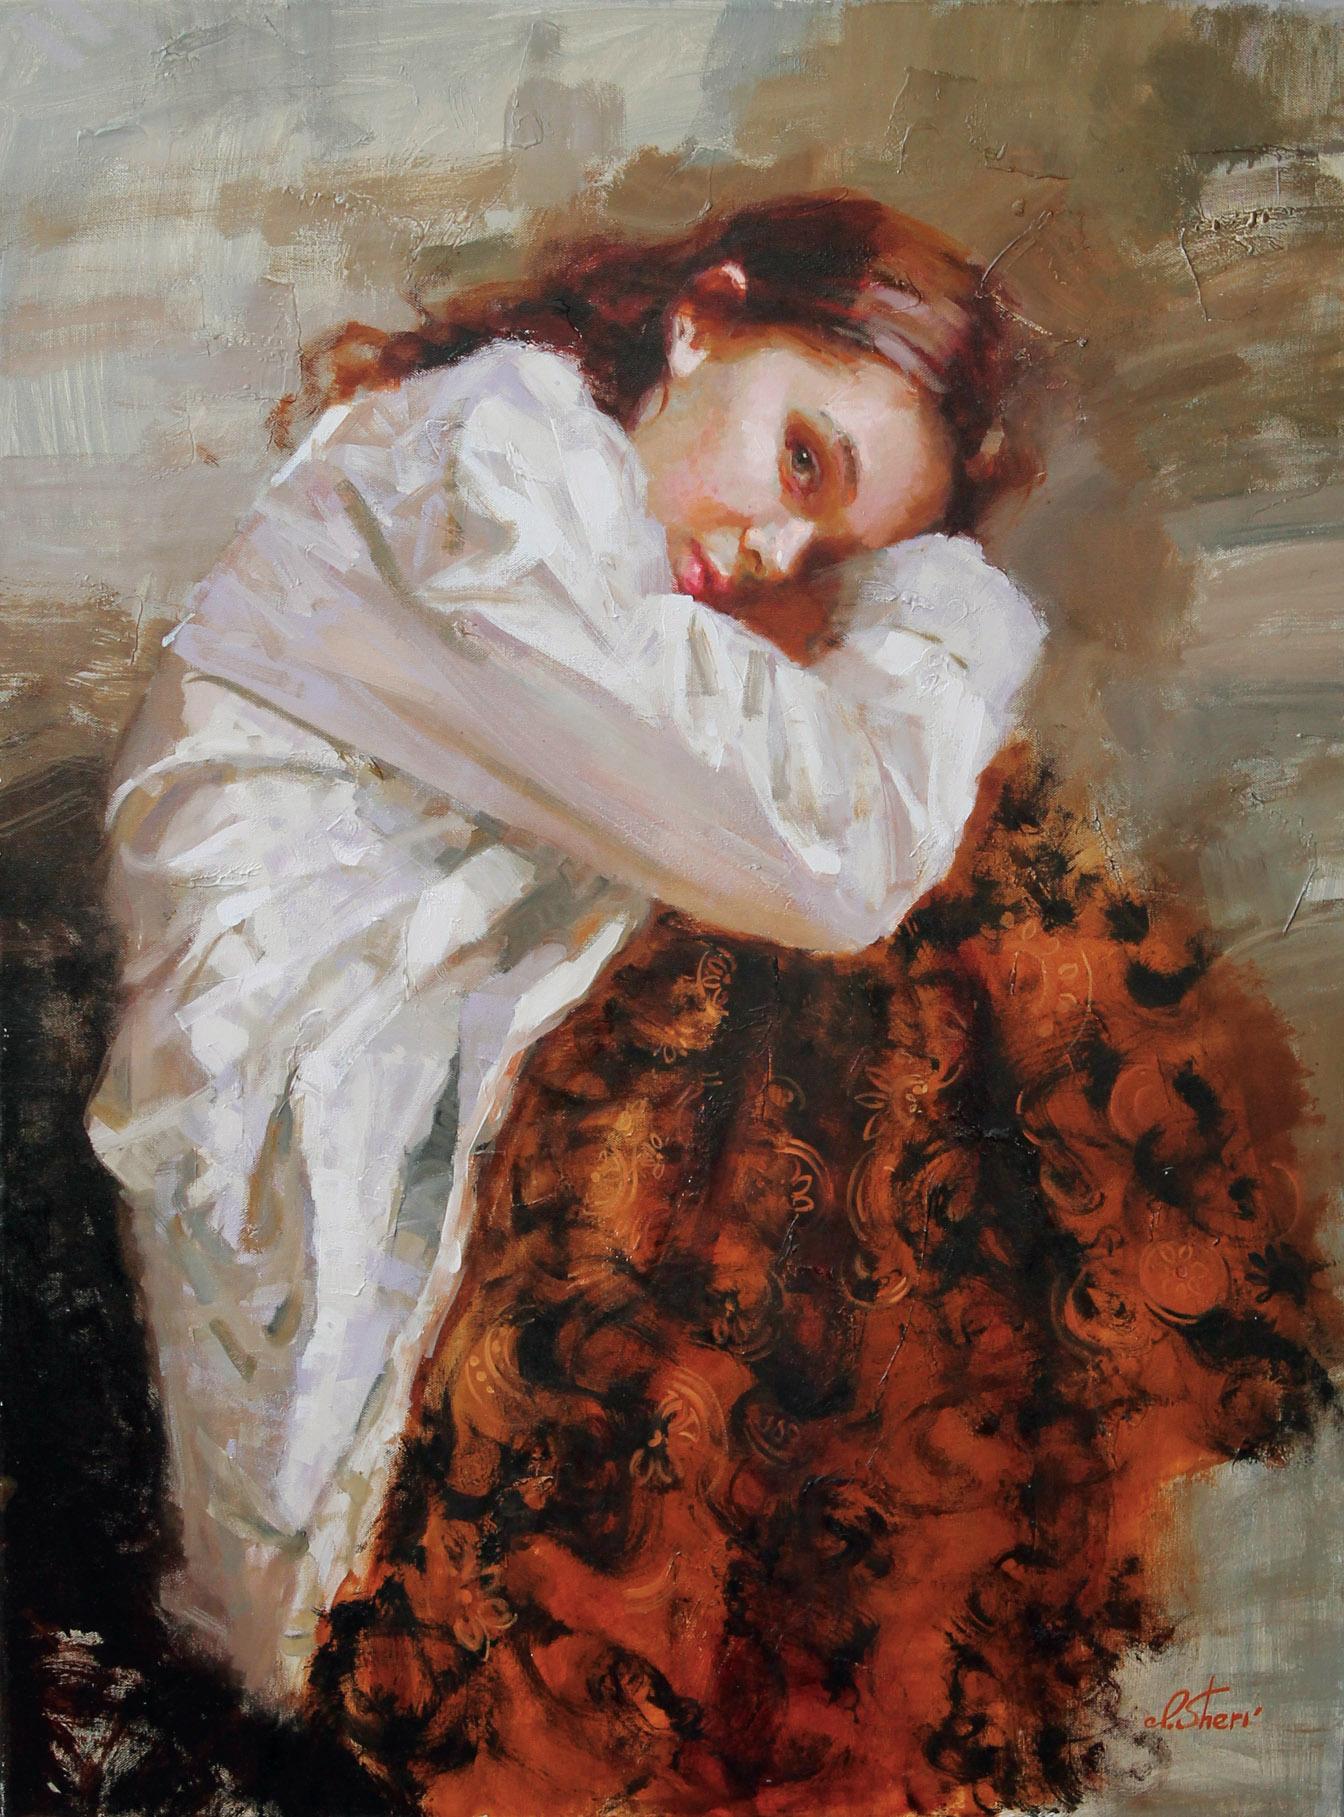 Portrait Painting Irene Sheri - Solitude